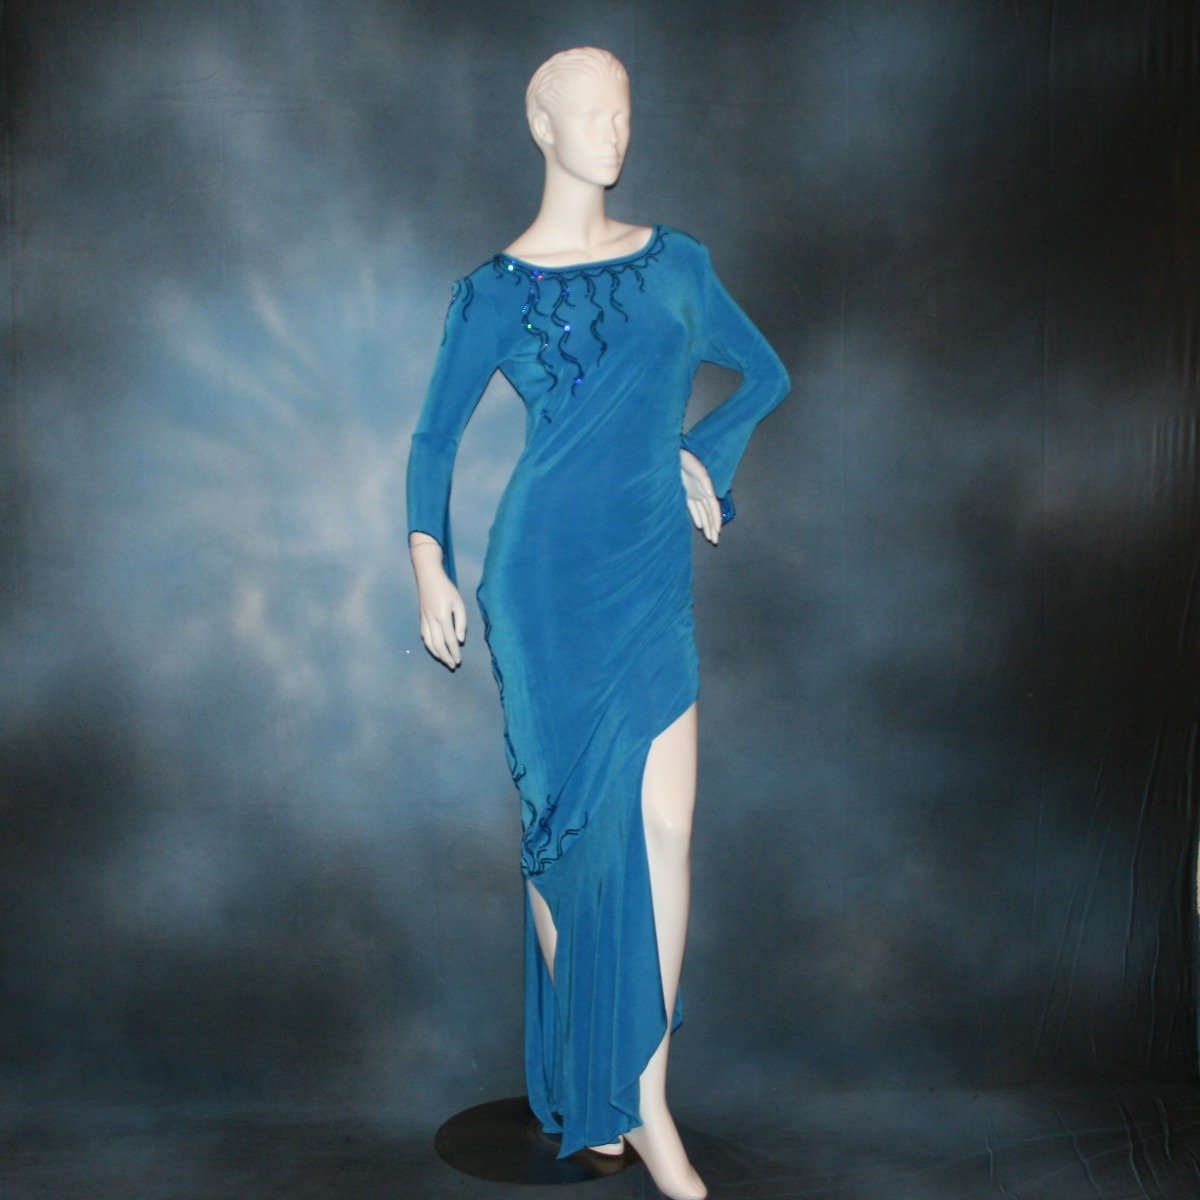 Crystal's Creations blue Latin/rhythm dress created of luxurious blue slinky, embellished with Swarovski detailed rhinestone work